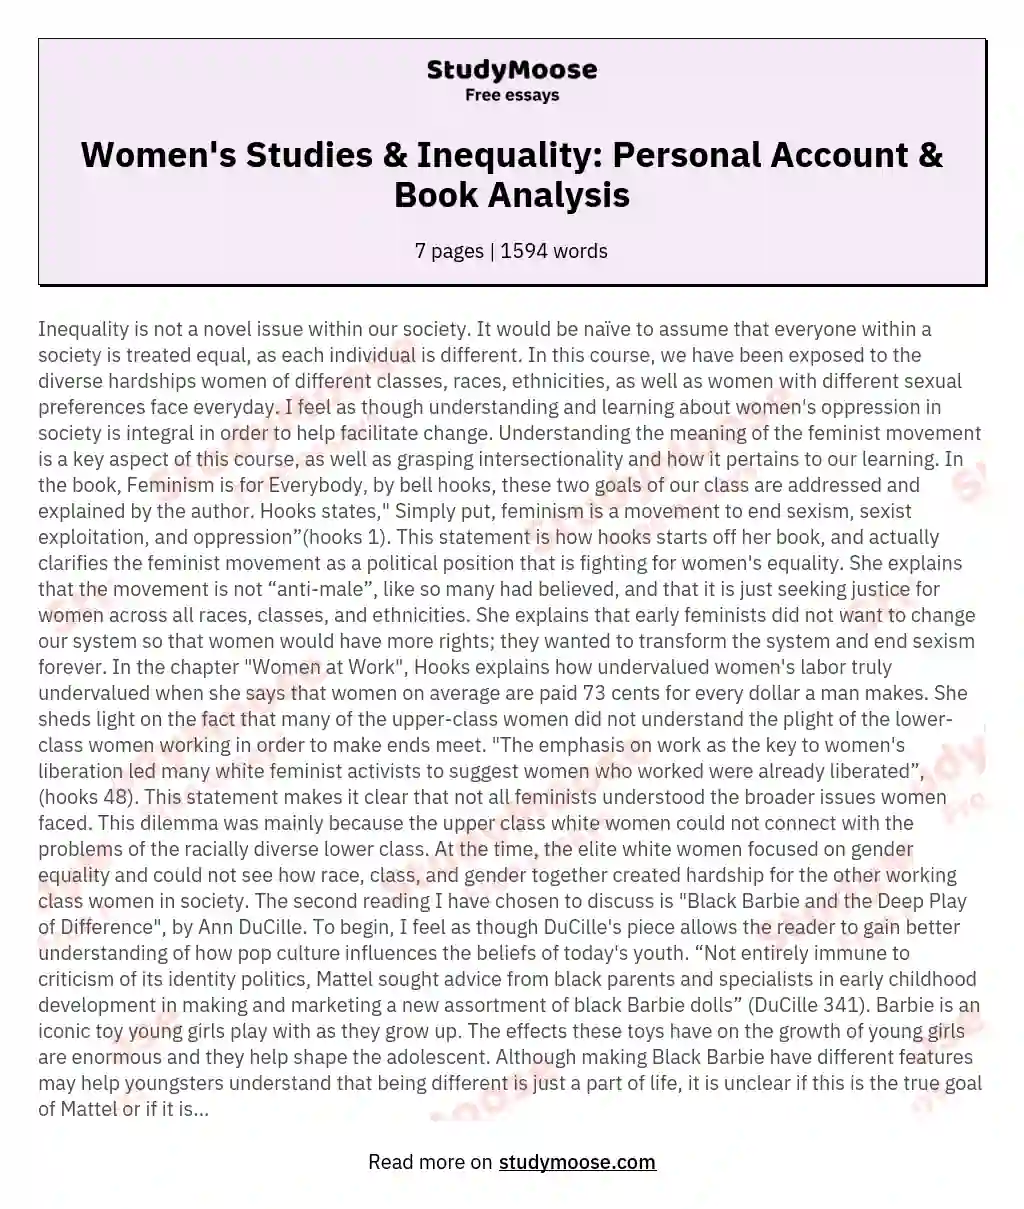 Women's Studies & Inequality: Personal Account & Book Analysis essay